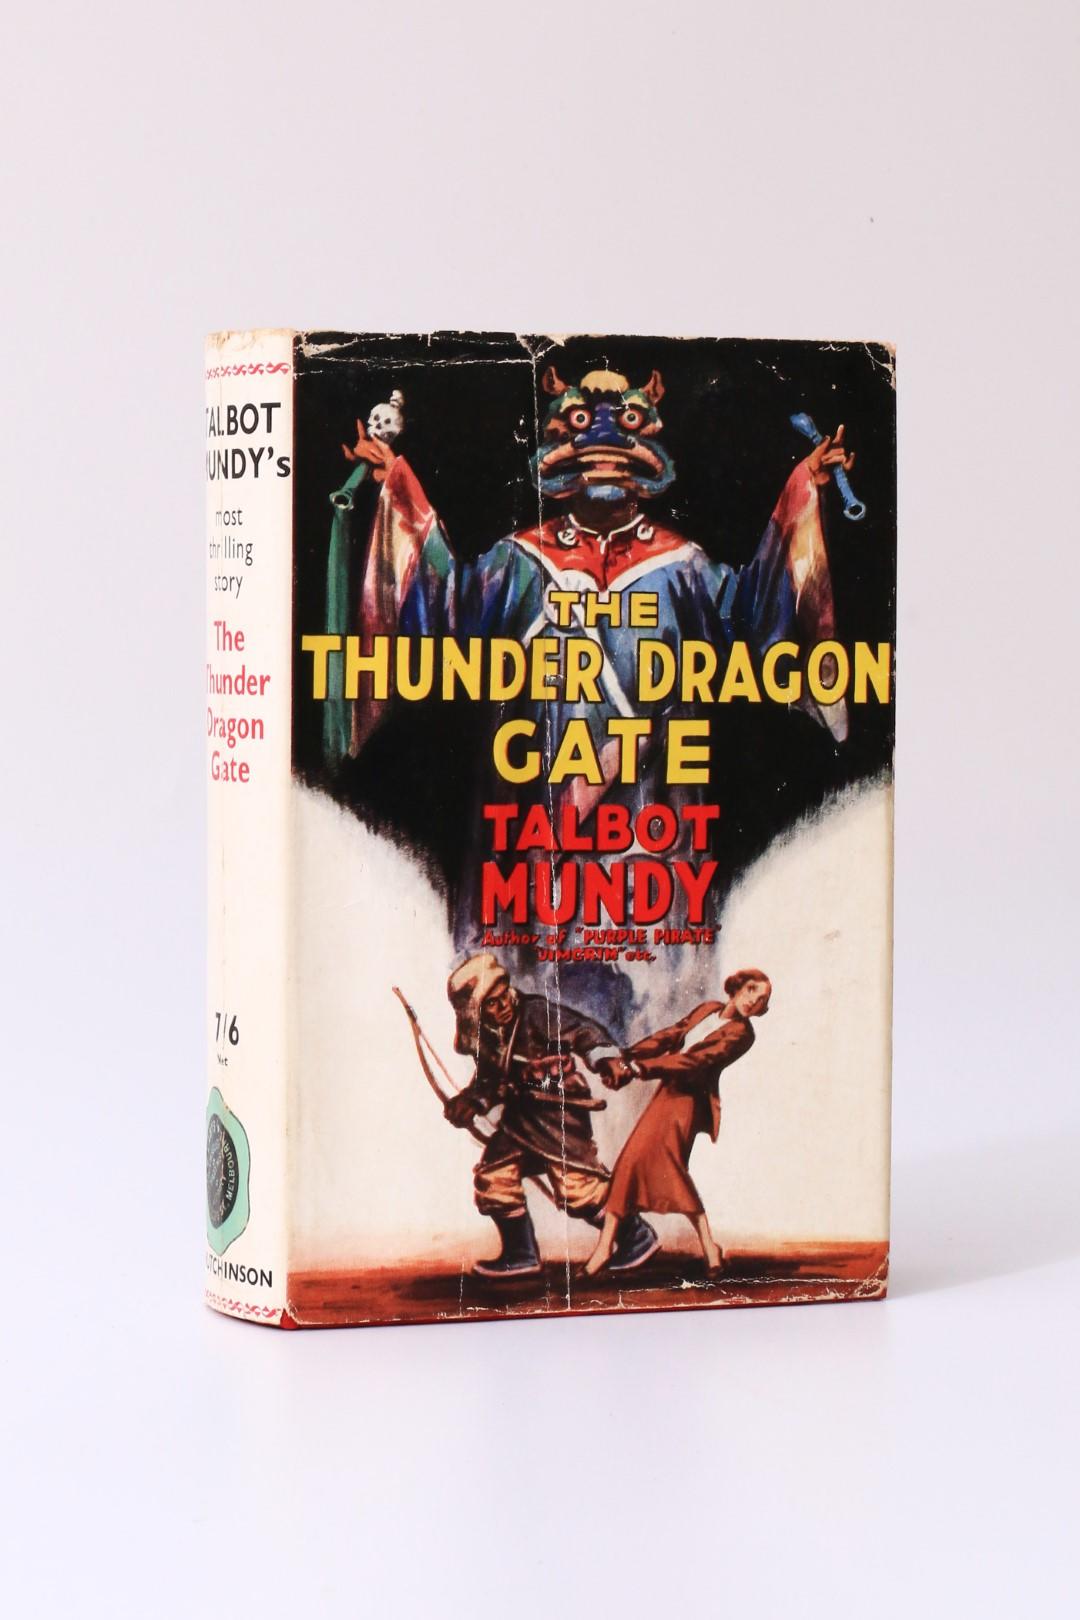 Talbot Mundy - The Thunder Dragon Gate - Hutchinson, n.d. [1937], First Edition.